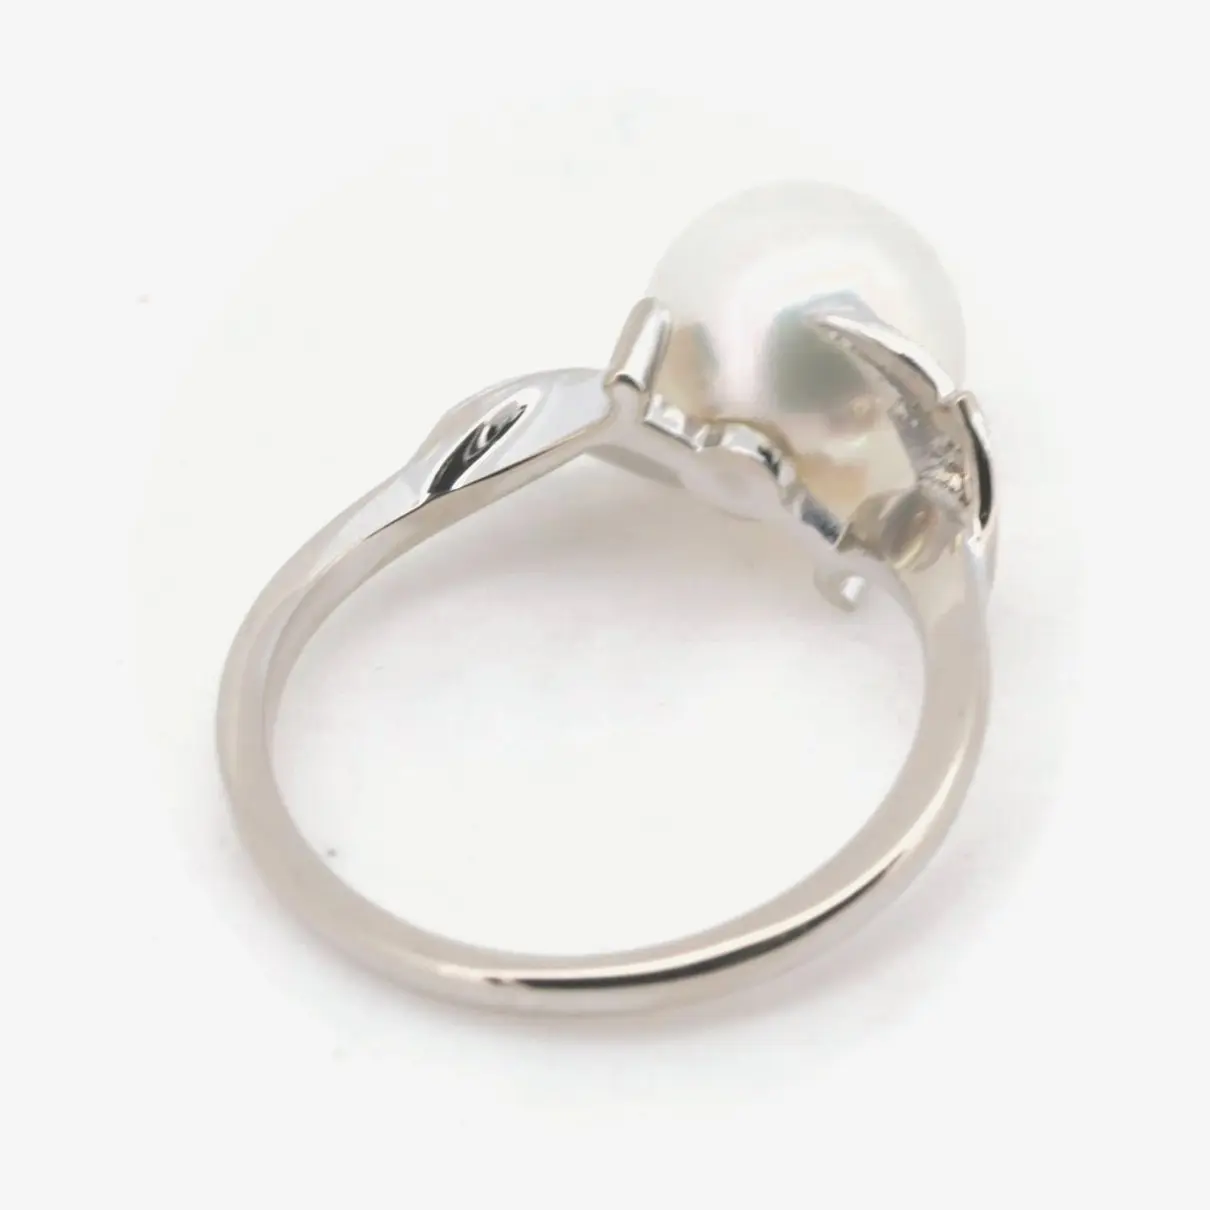 Buy Mikimoto White gold ring online